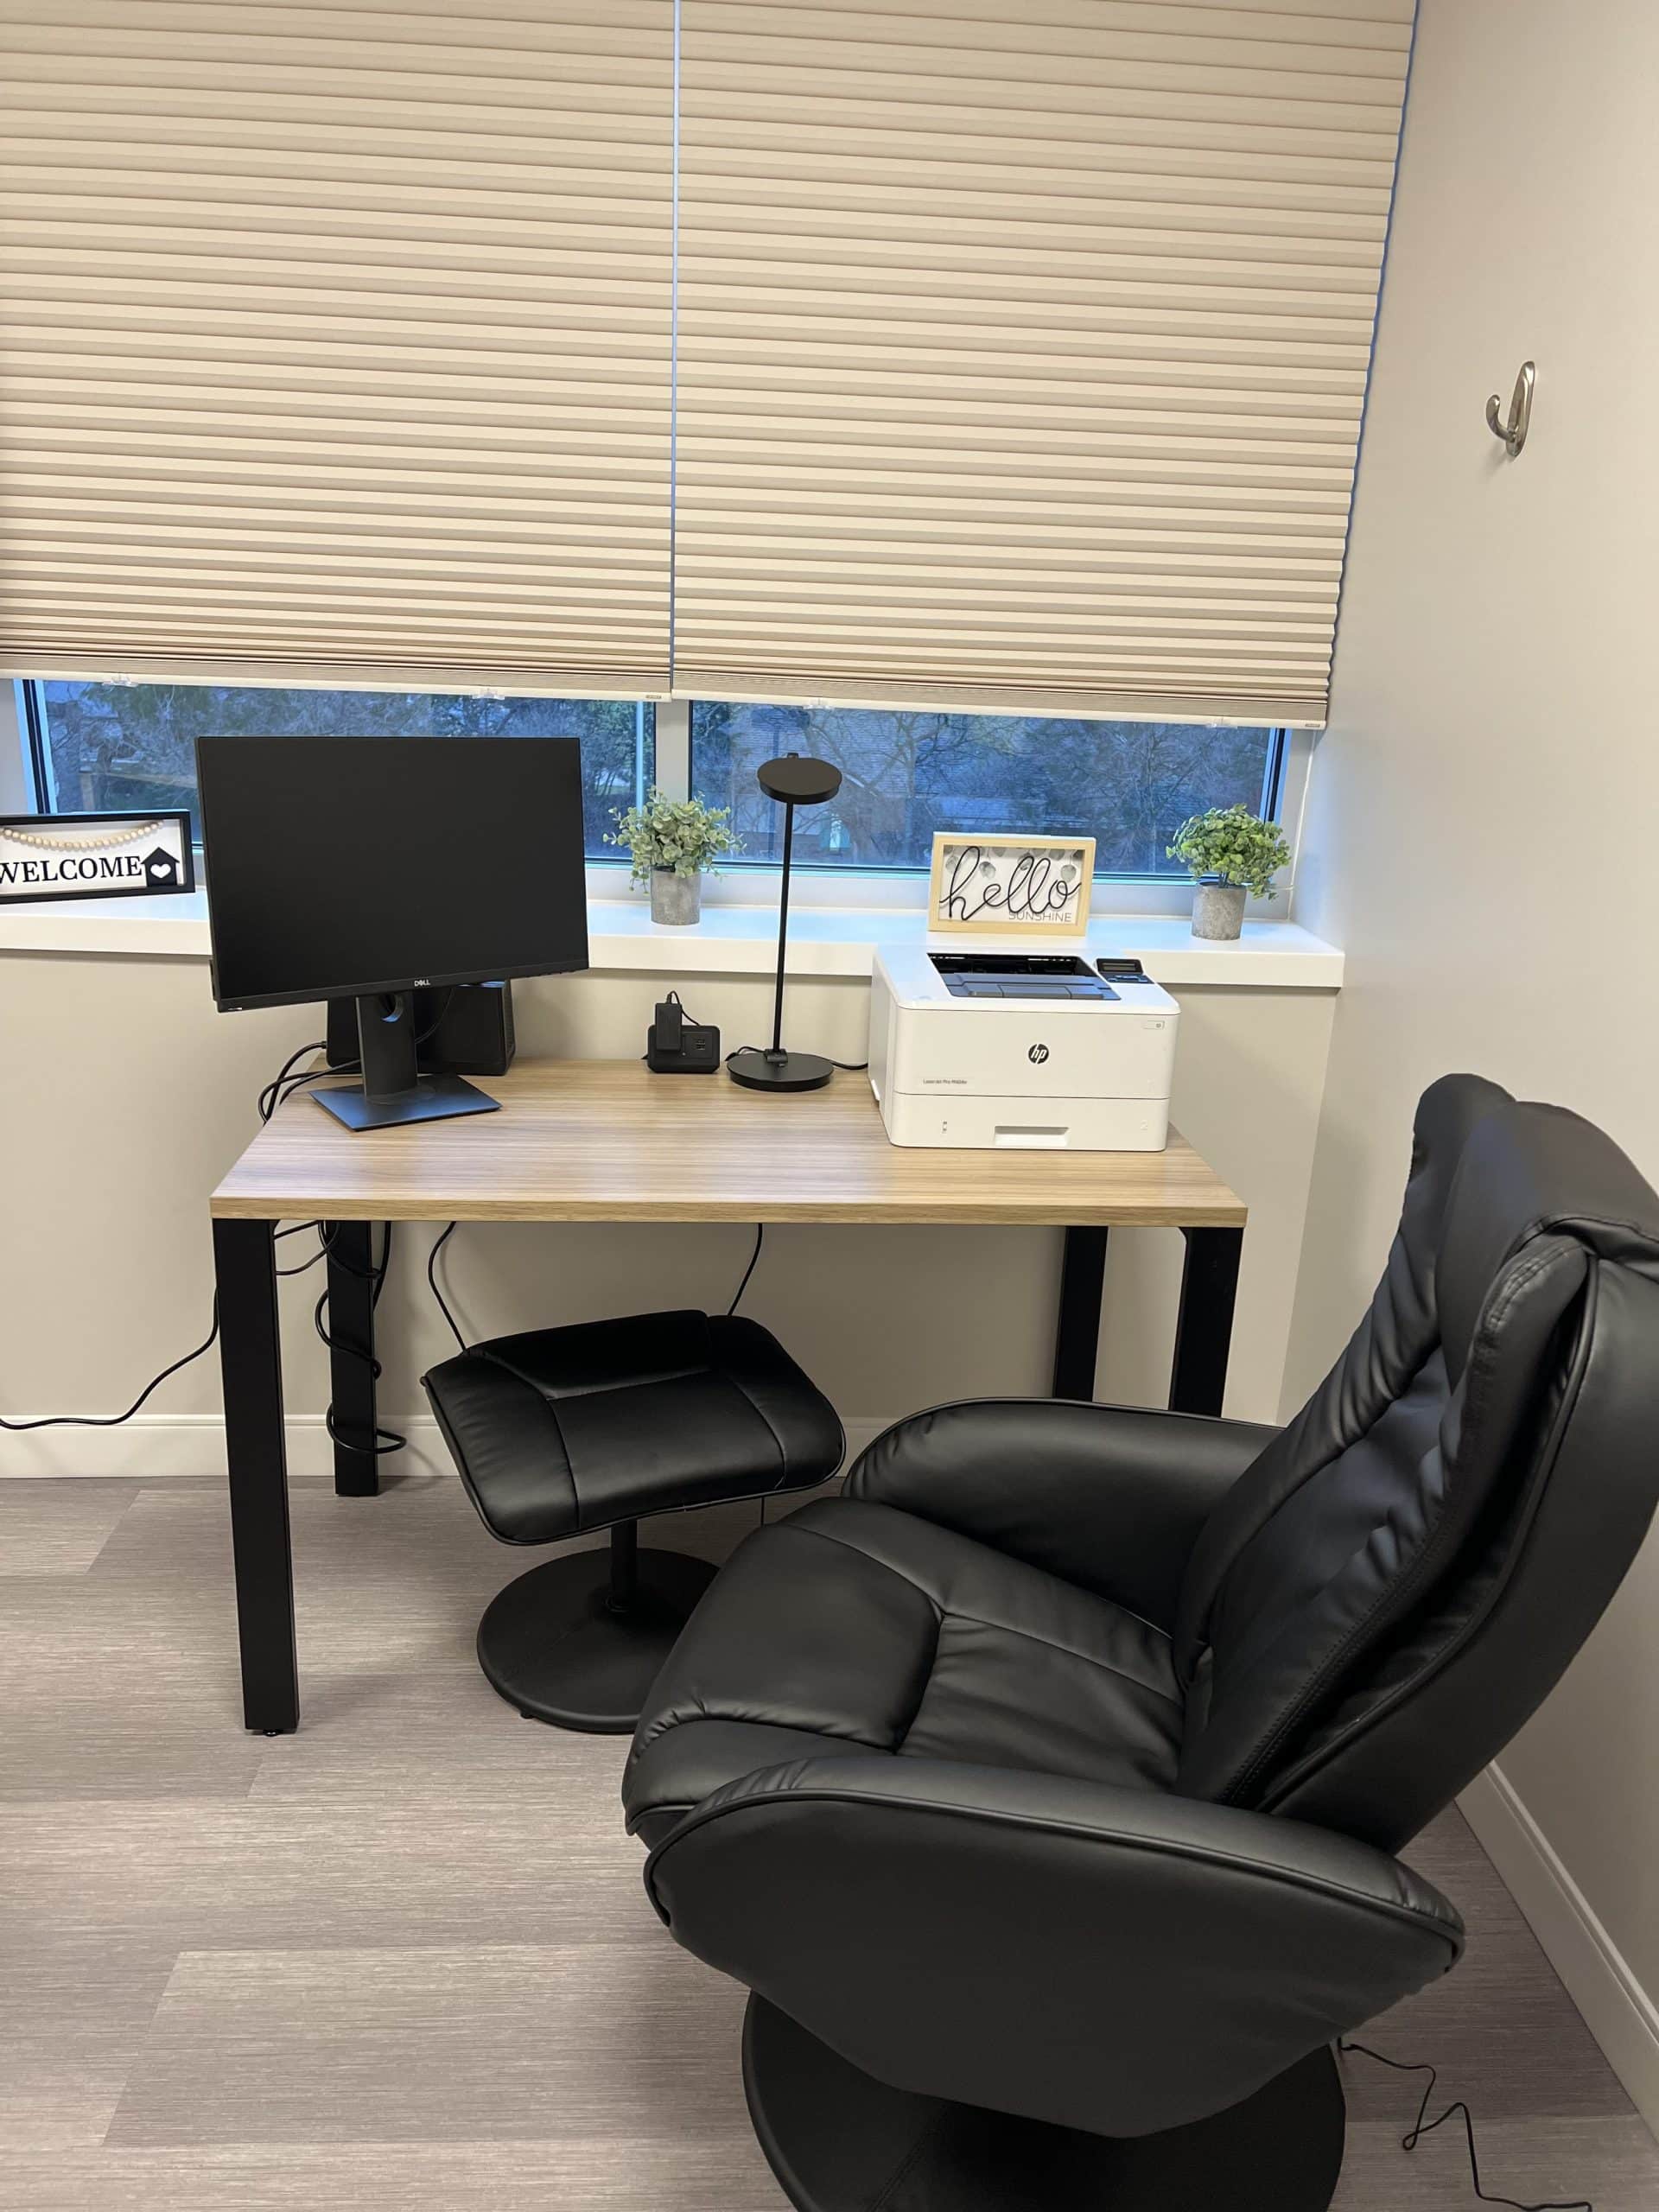 executive-rehab-detox-room-desk-chair-IMG_8412-scaled.jpeg